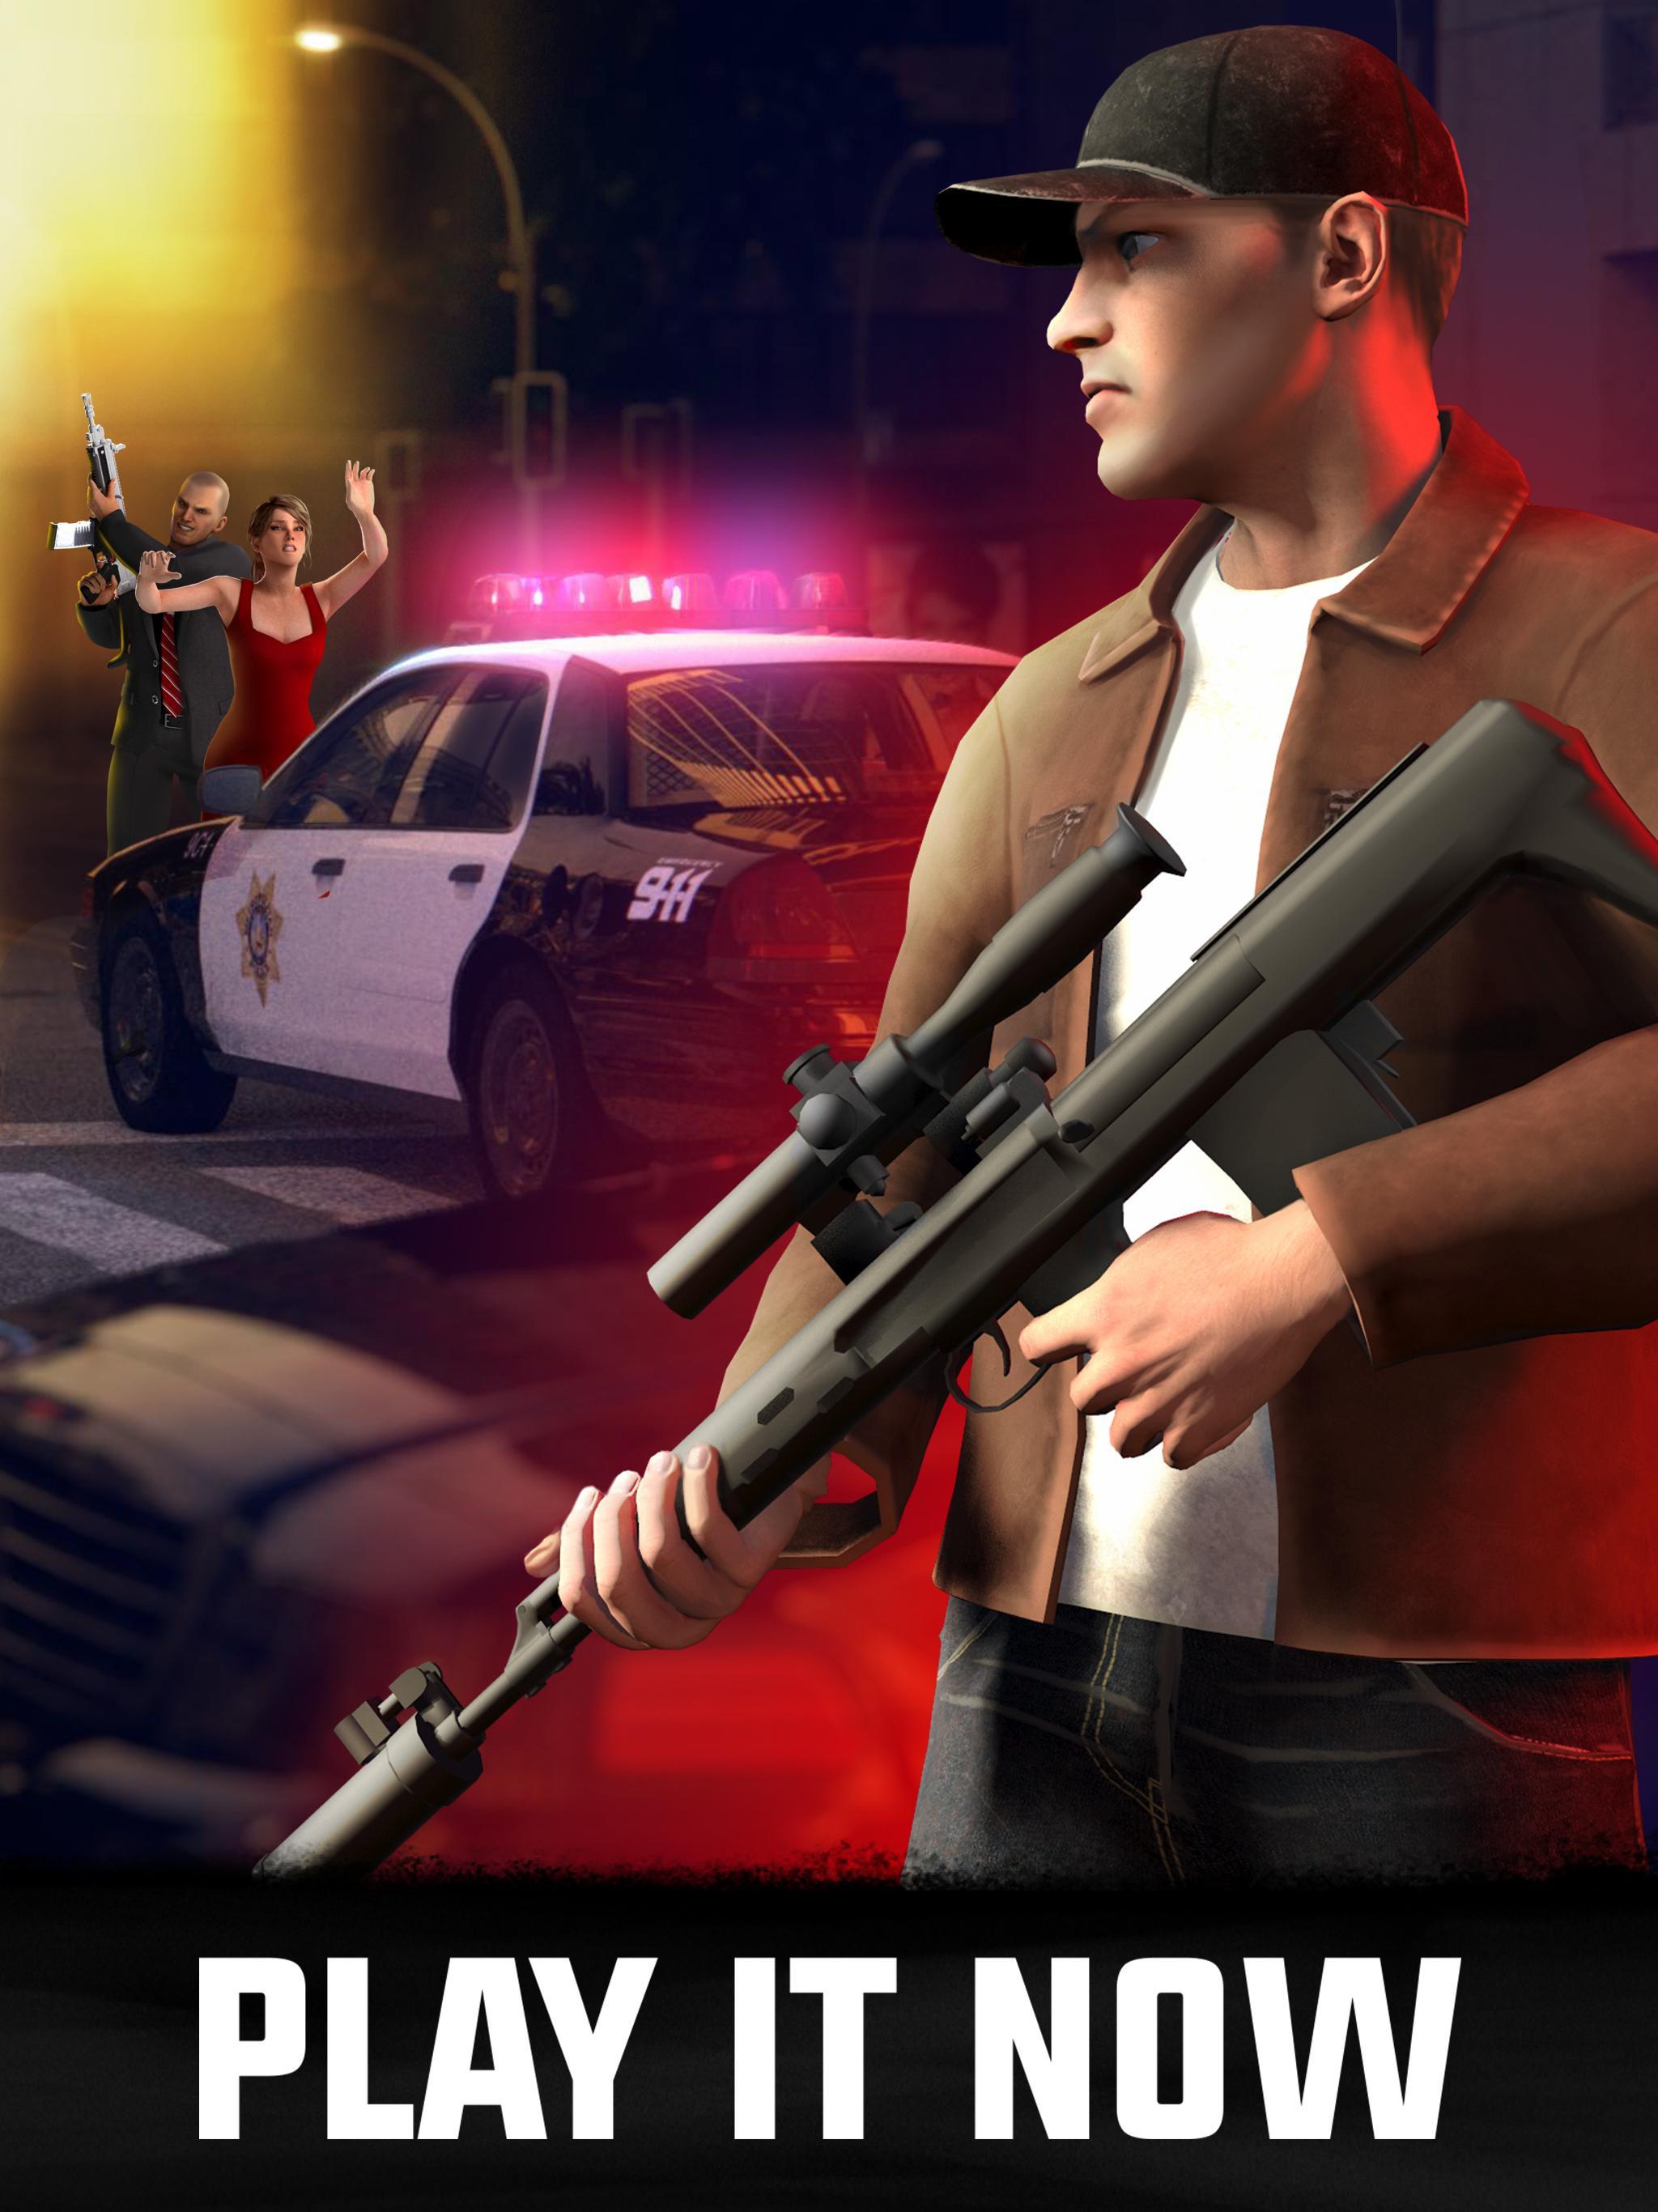 Sniper 3D Fun Free Online FPS Shooting Game 3.15.1 Screenshot 3